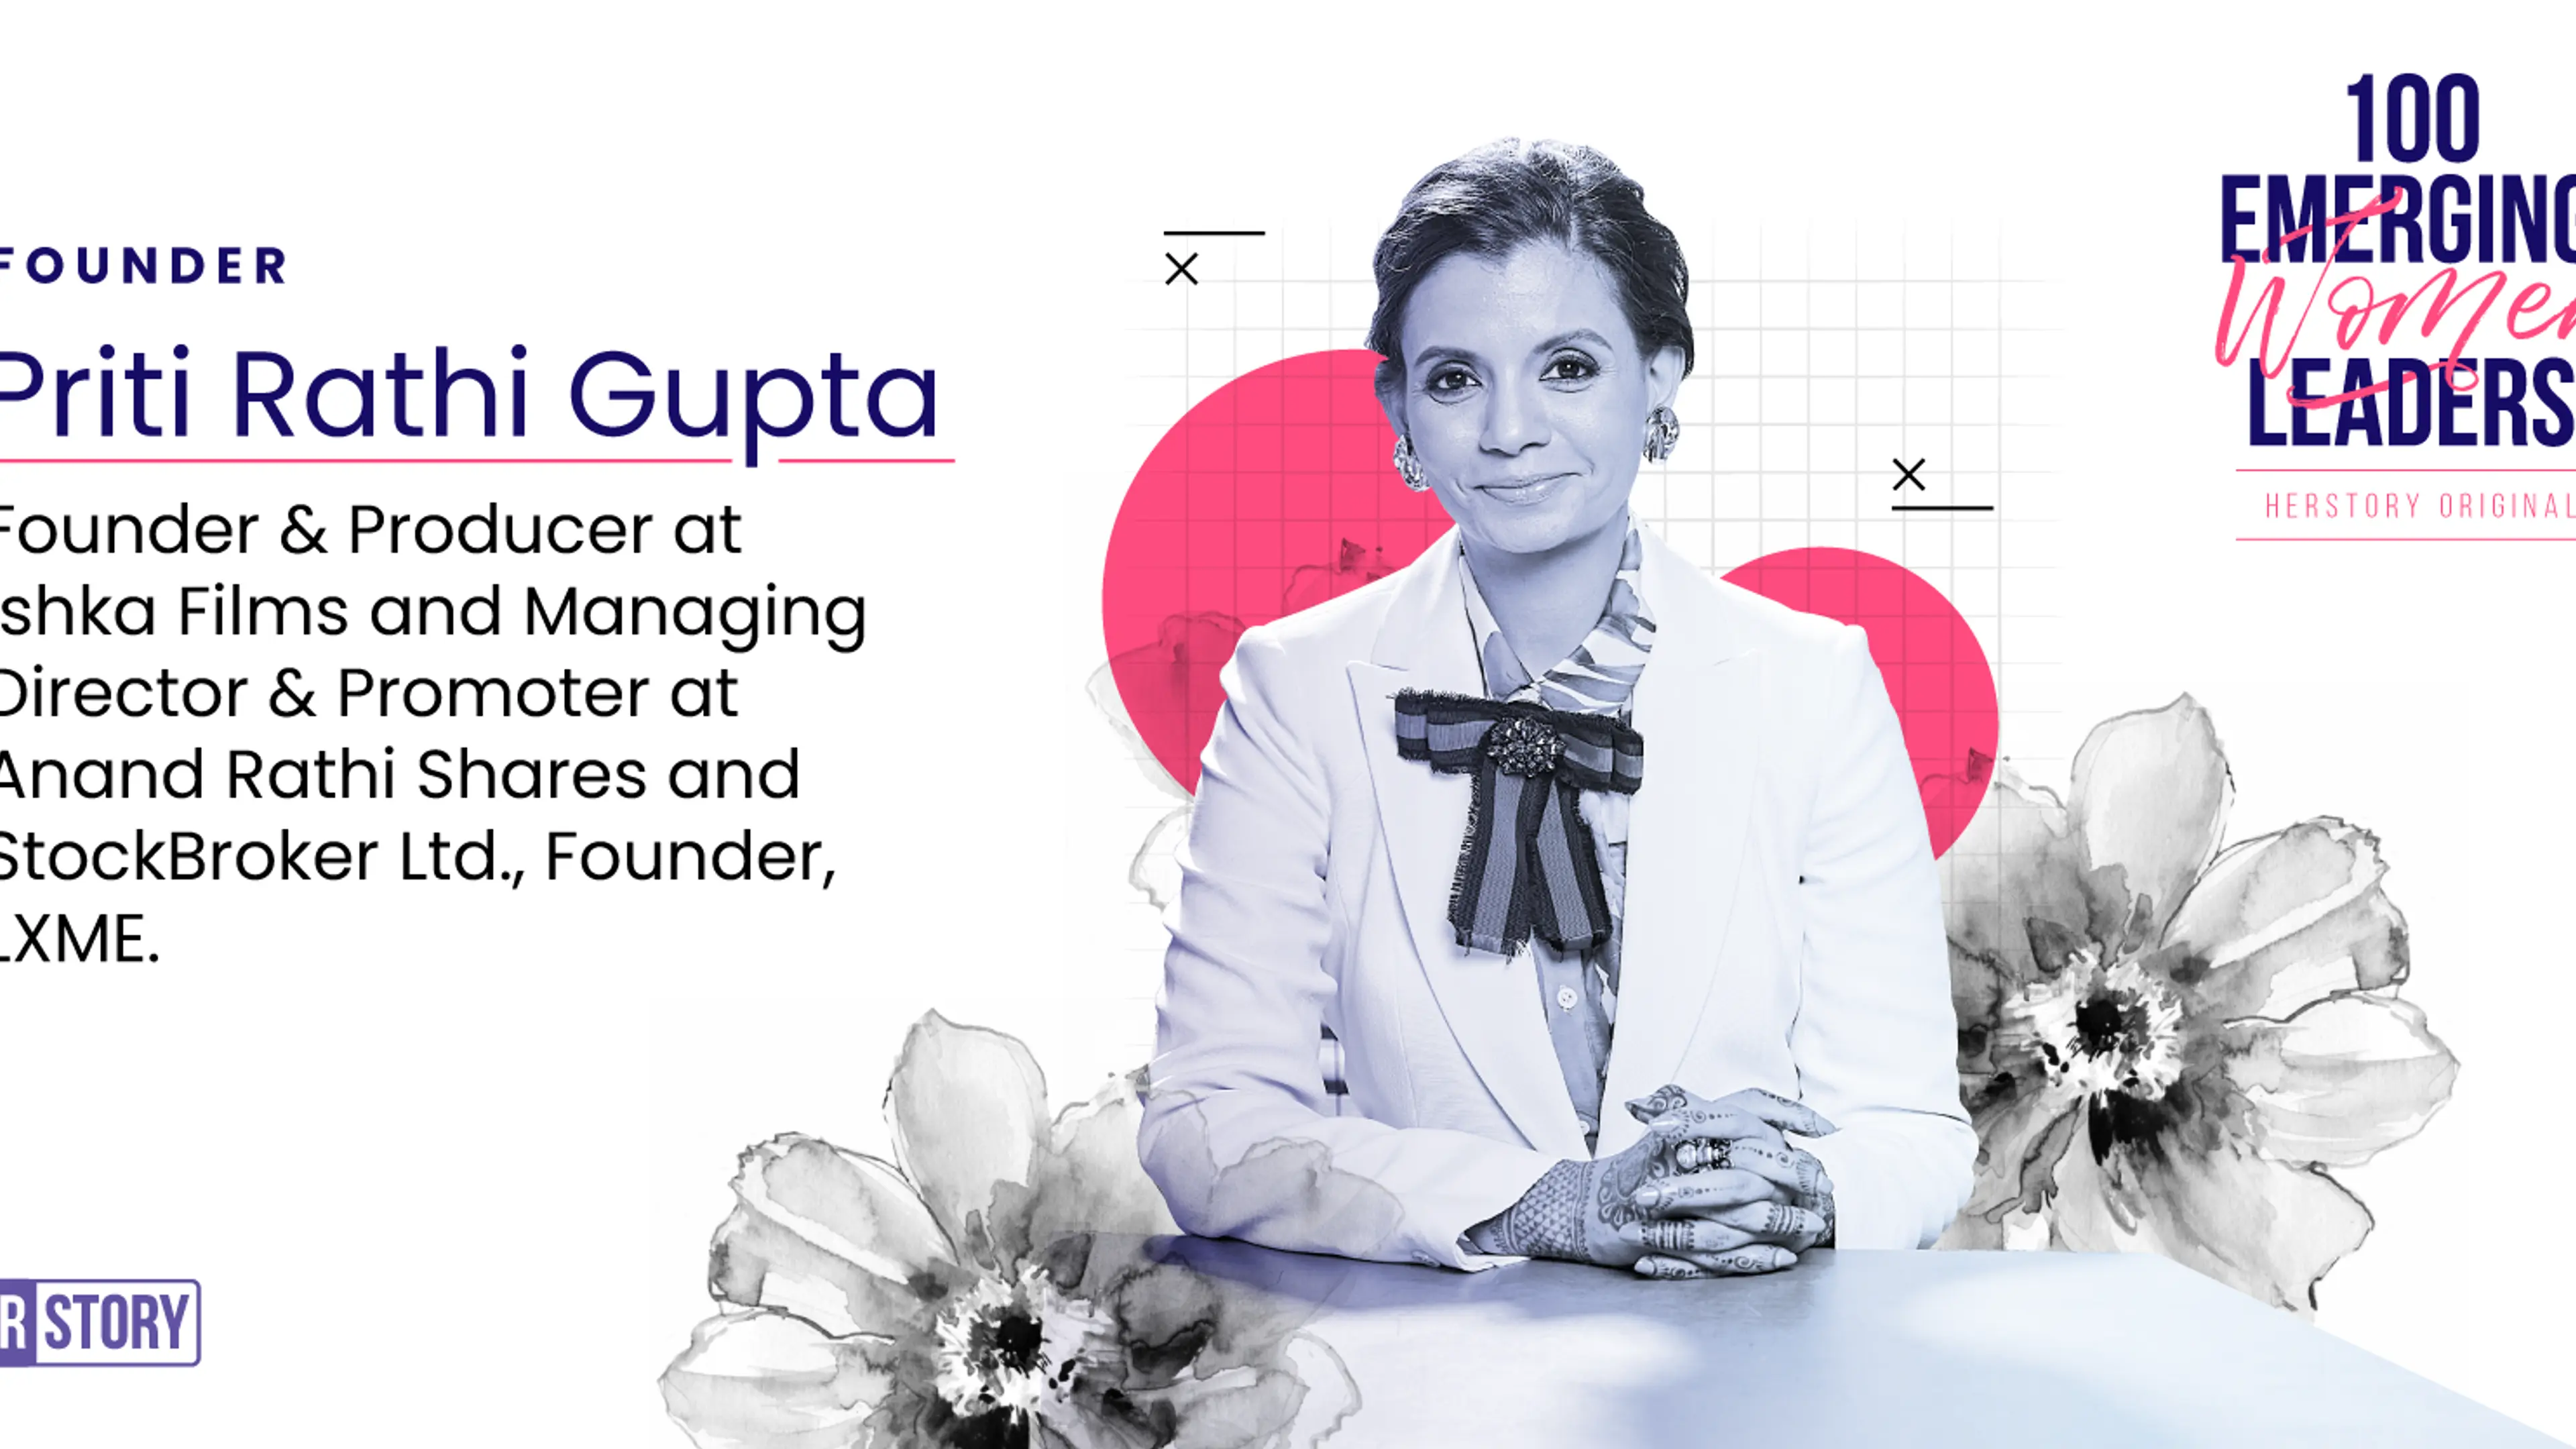 [100 Emerging Women Leaders] How filmmaker, fintech entrepreneur Priti Rathi Gupta is empowering women